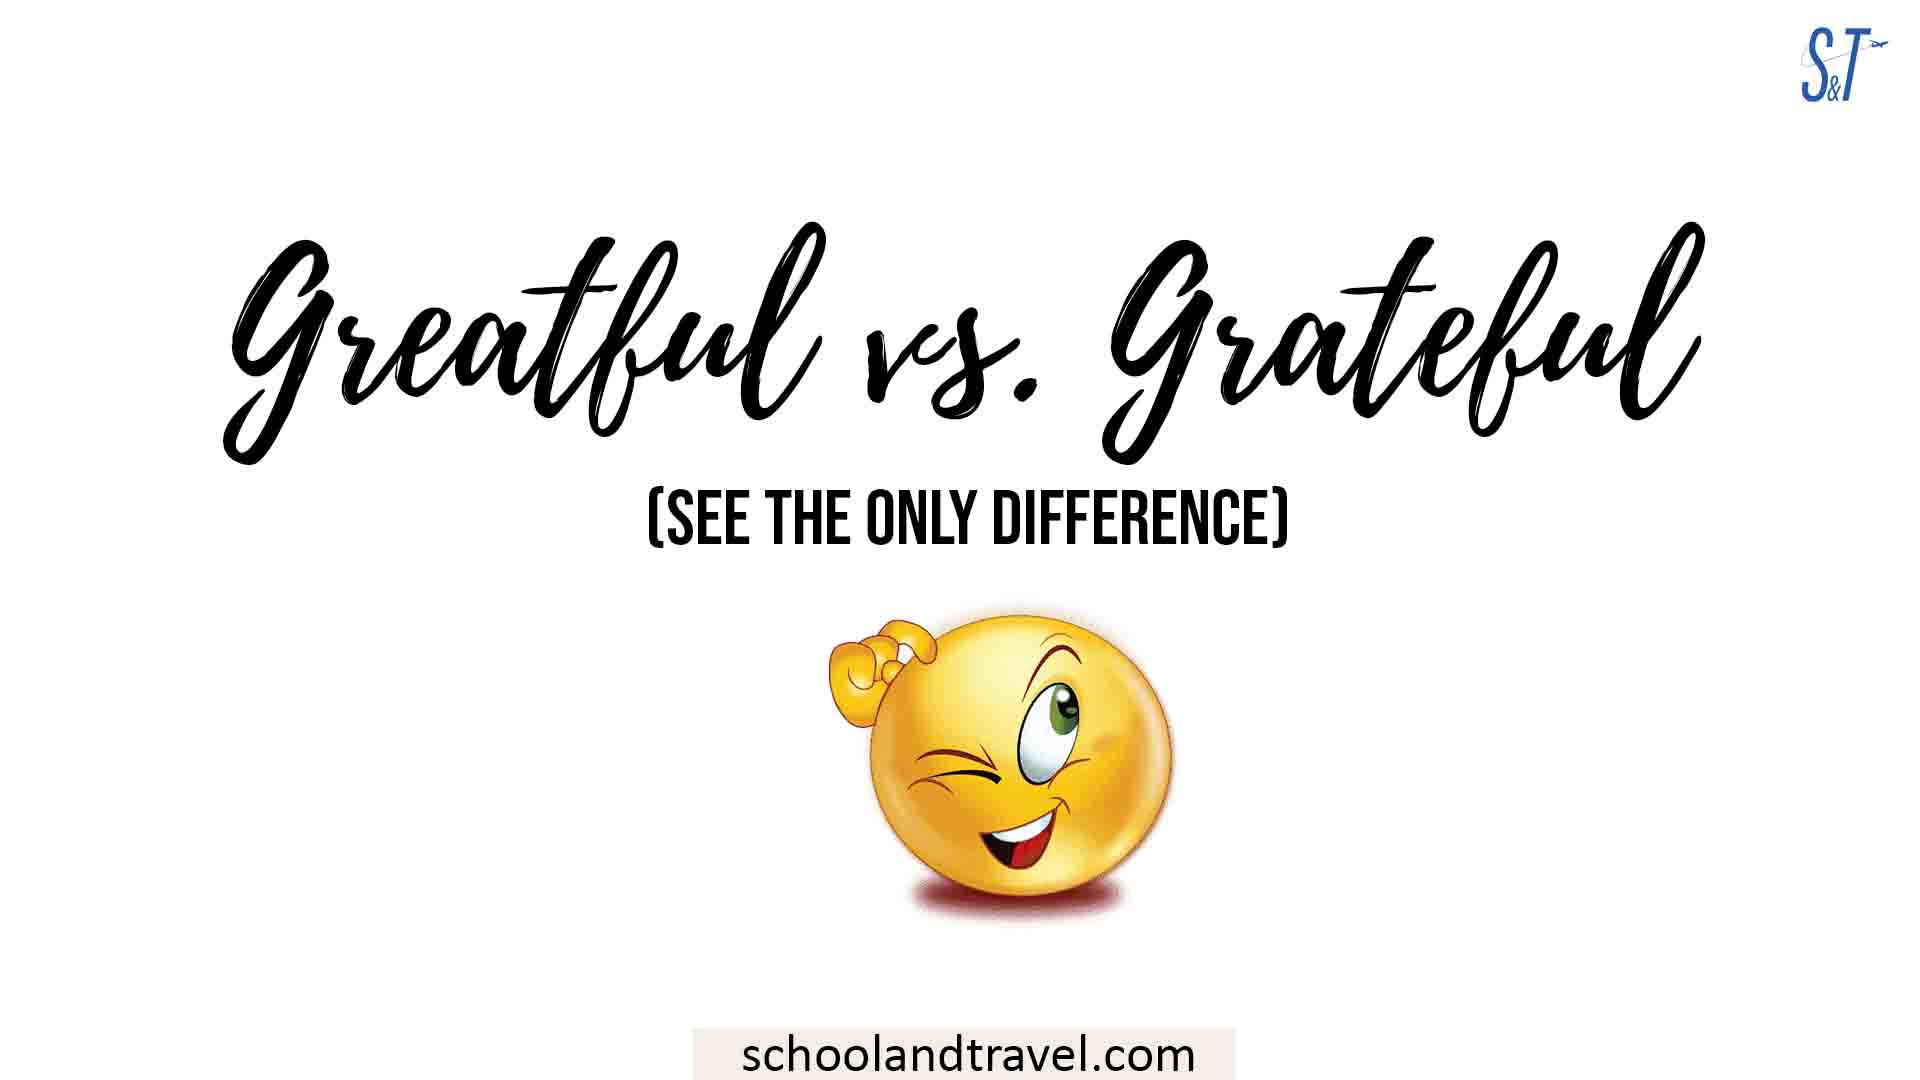 greatful vs. grateful